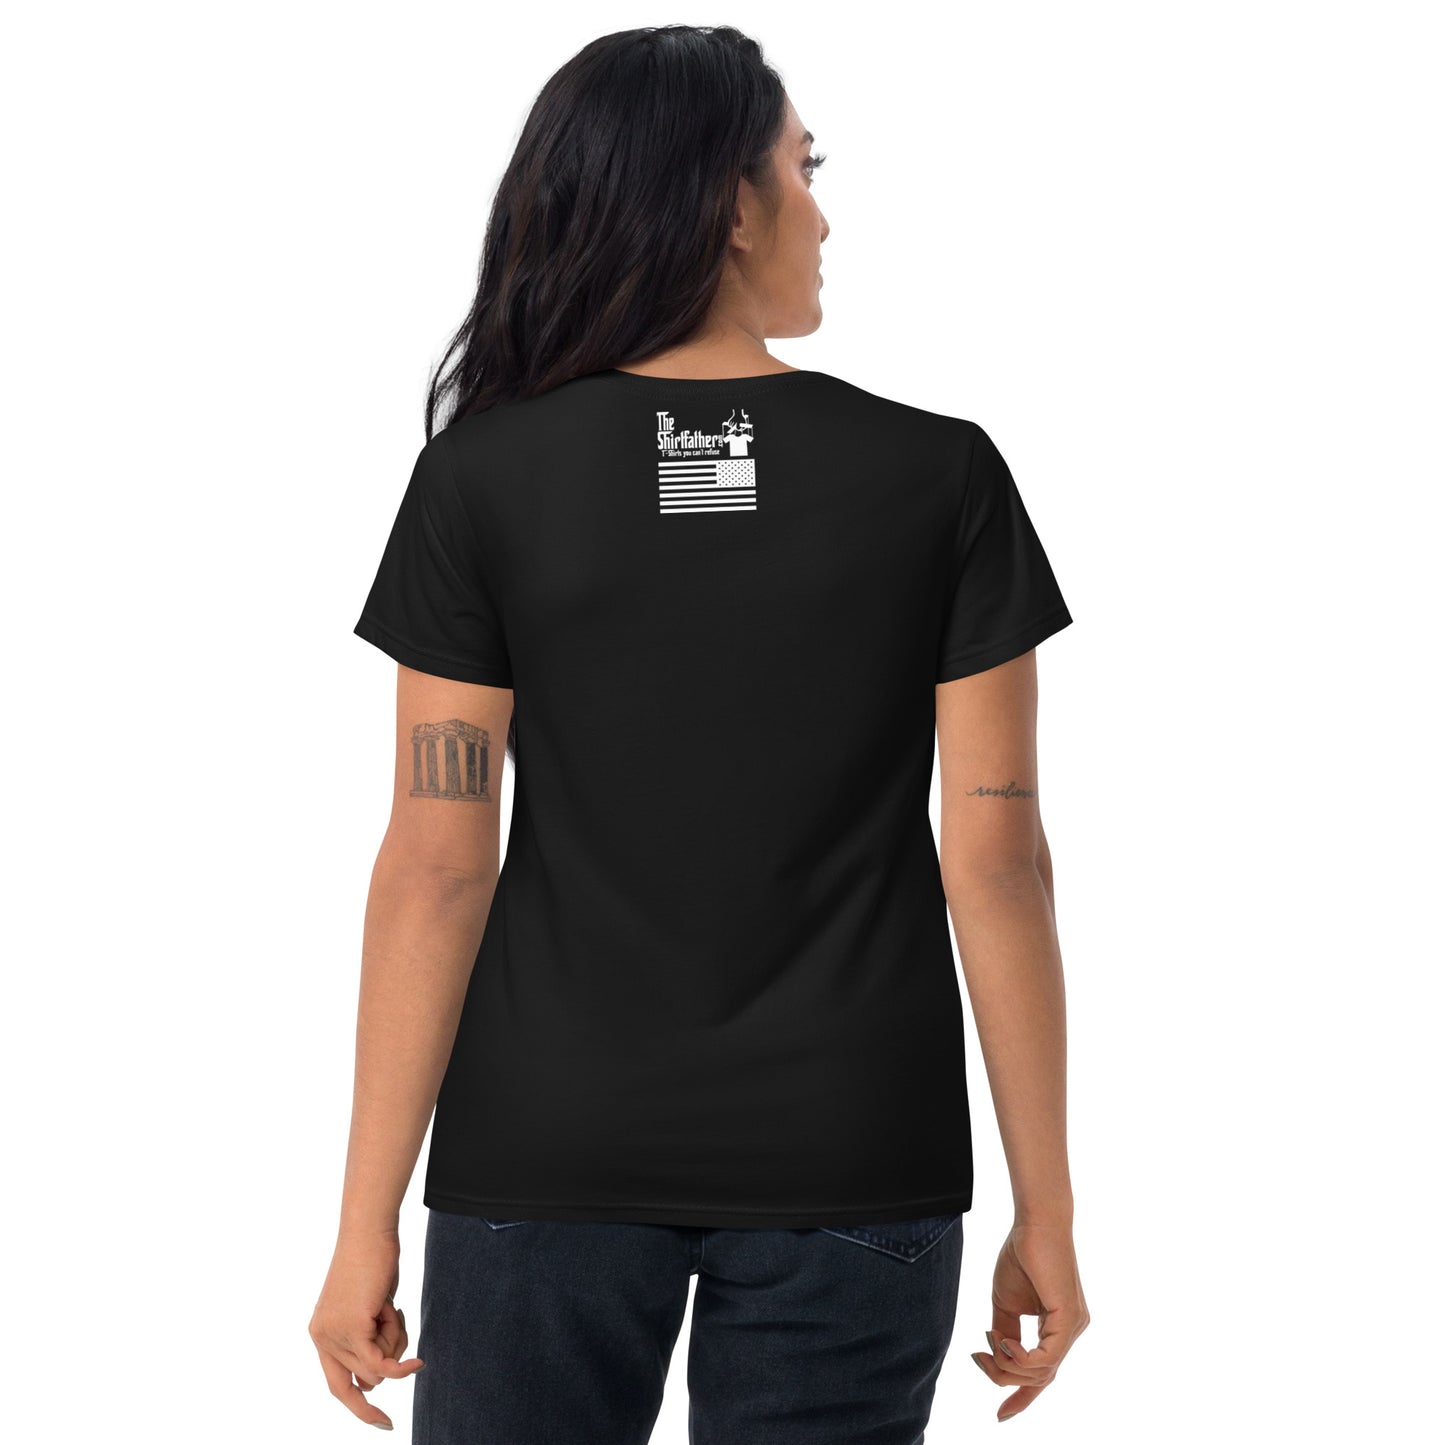 Be a good Human - Women's T-Shirt | TheShirtfather